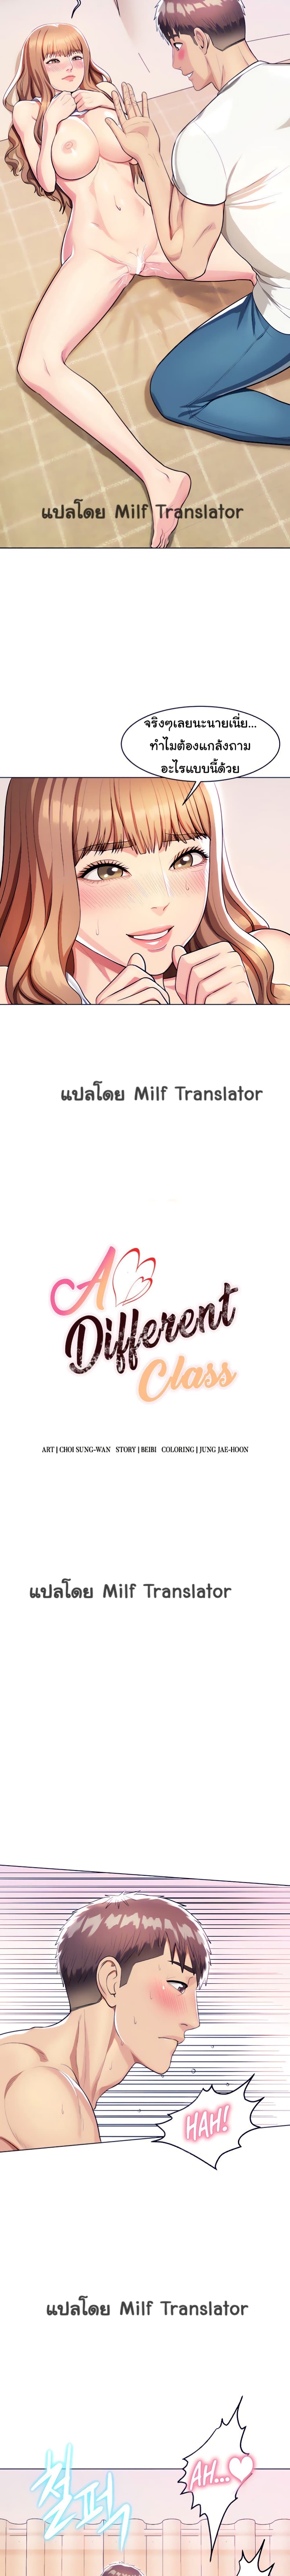 A Different Class 6 (6)